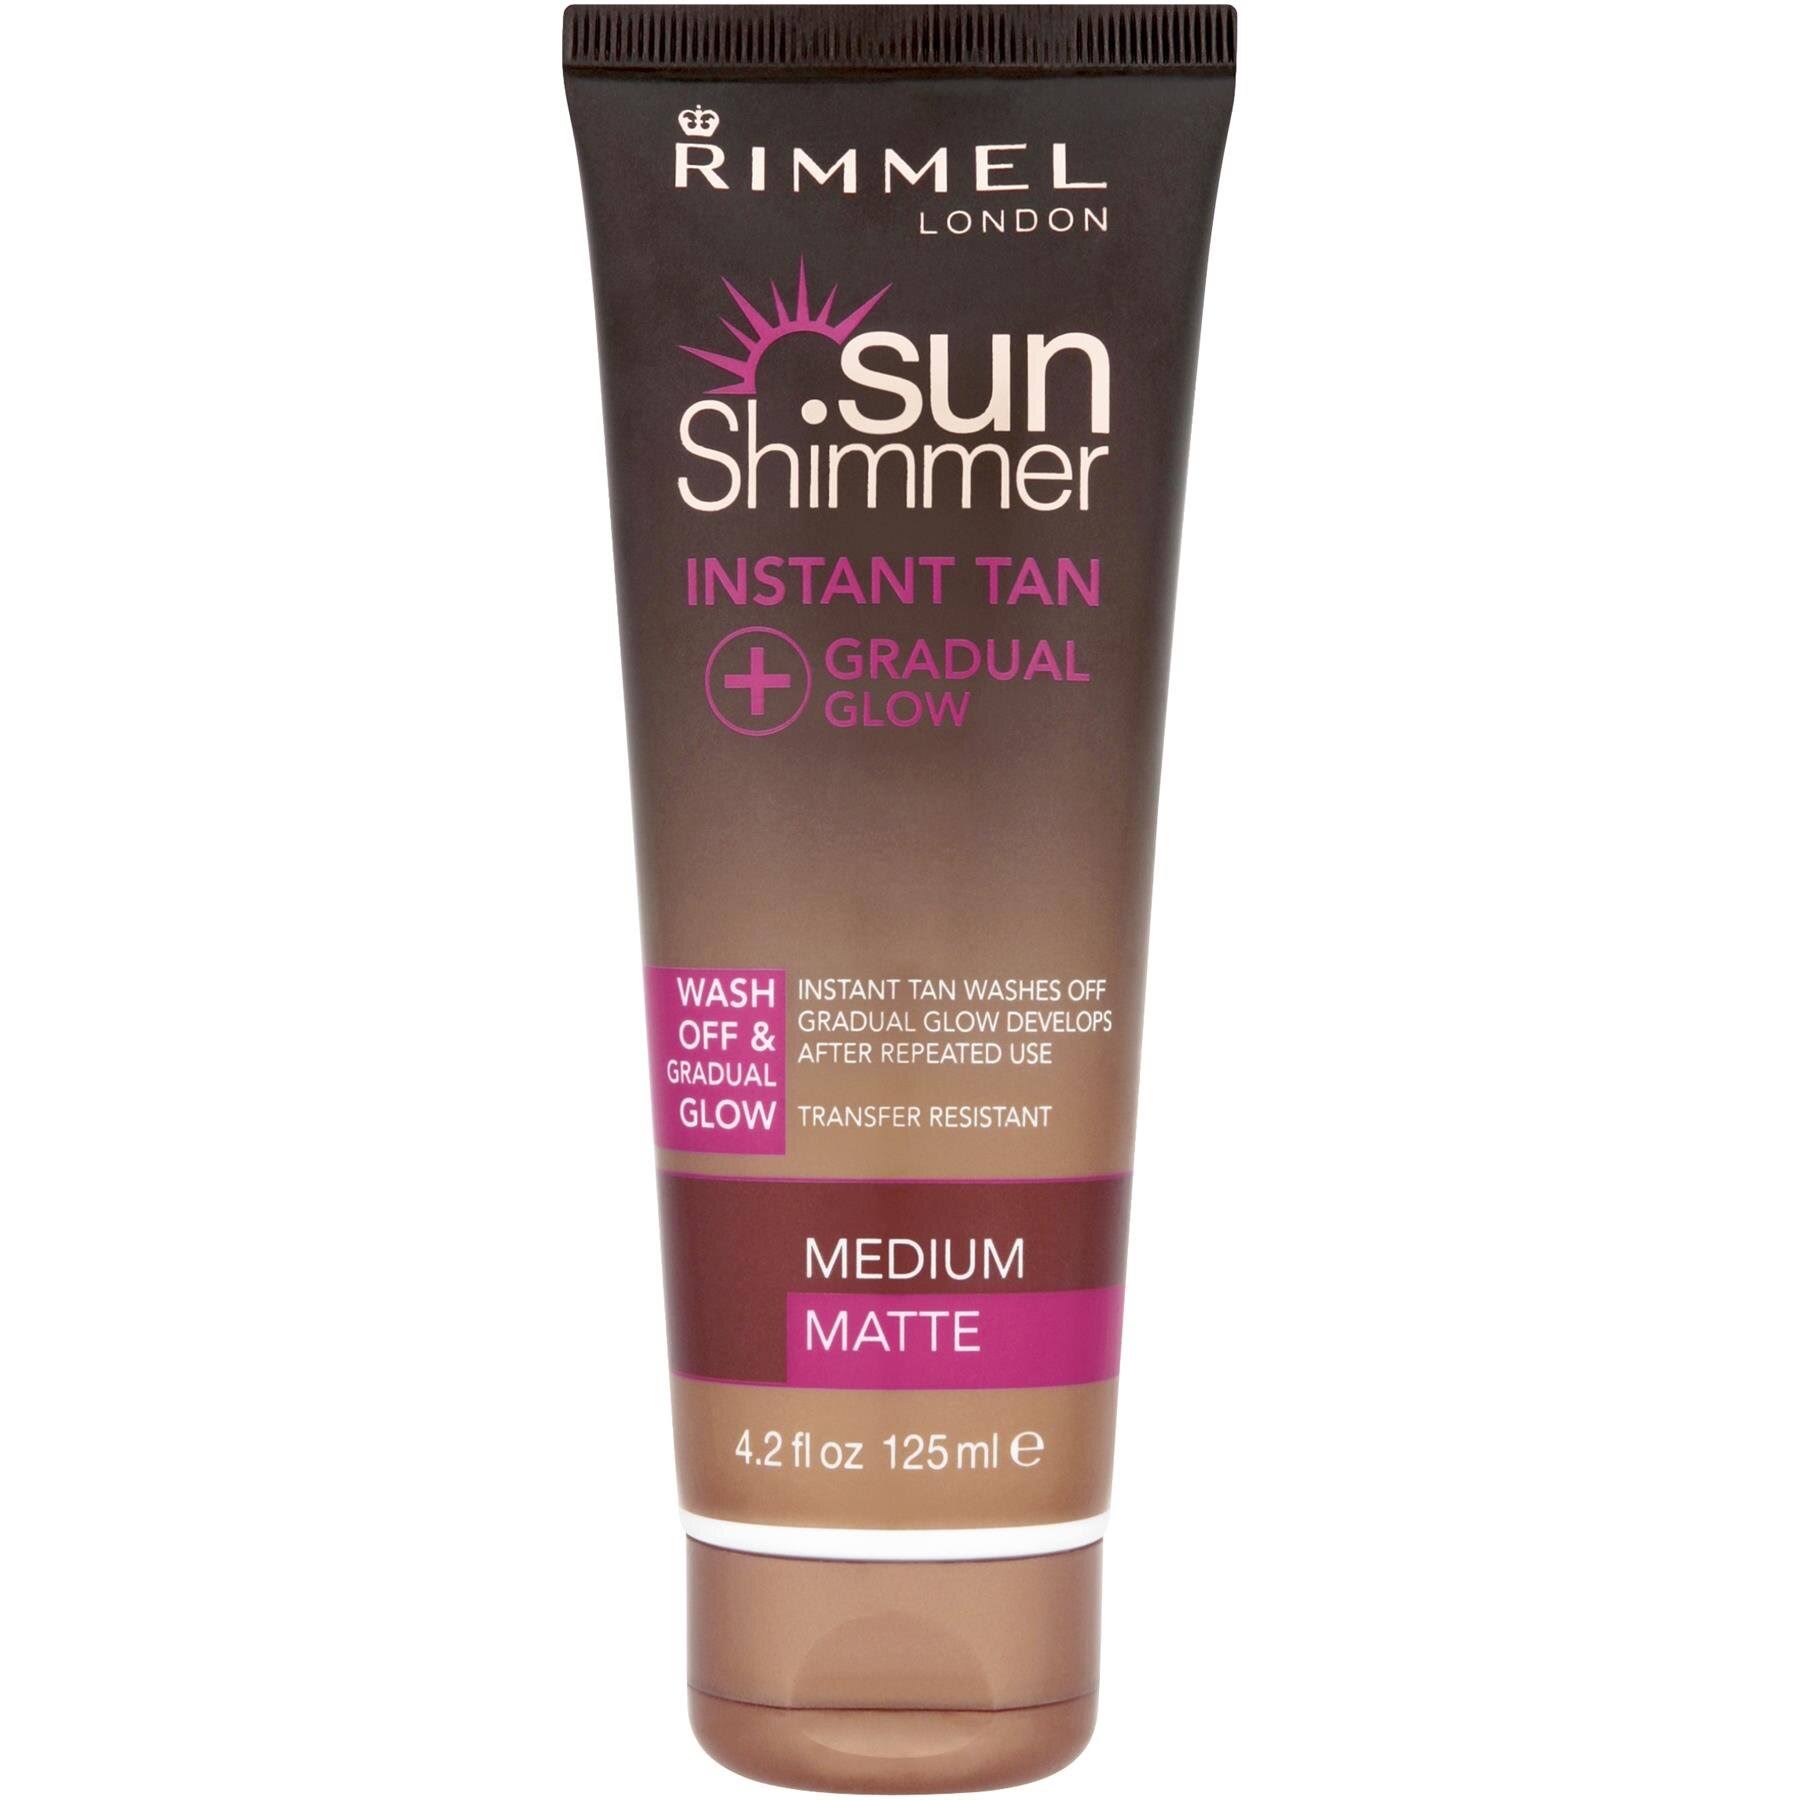 Rimmel London Sun Shimmer Instant Tan Wash Off + Gradual Glow Cream - Medium Matte, 125ml